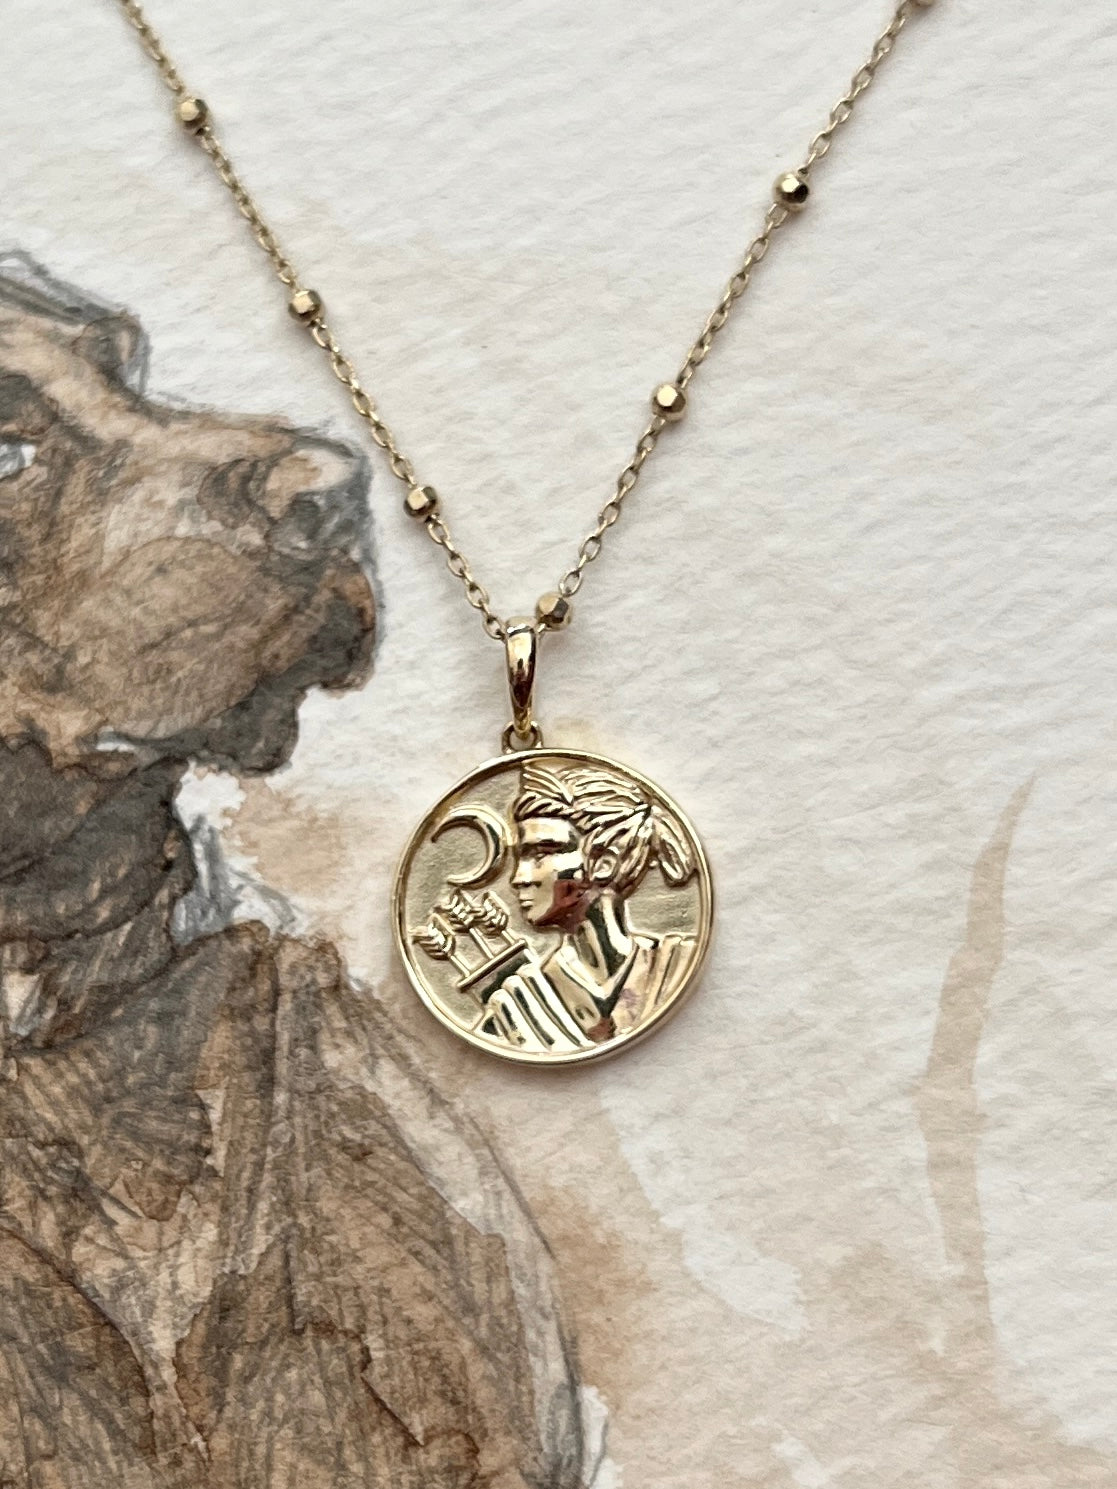 Artemis coin necklace